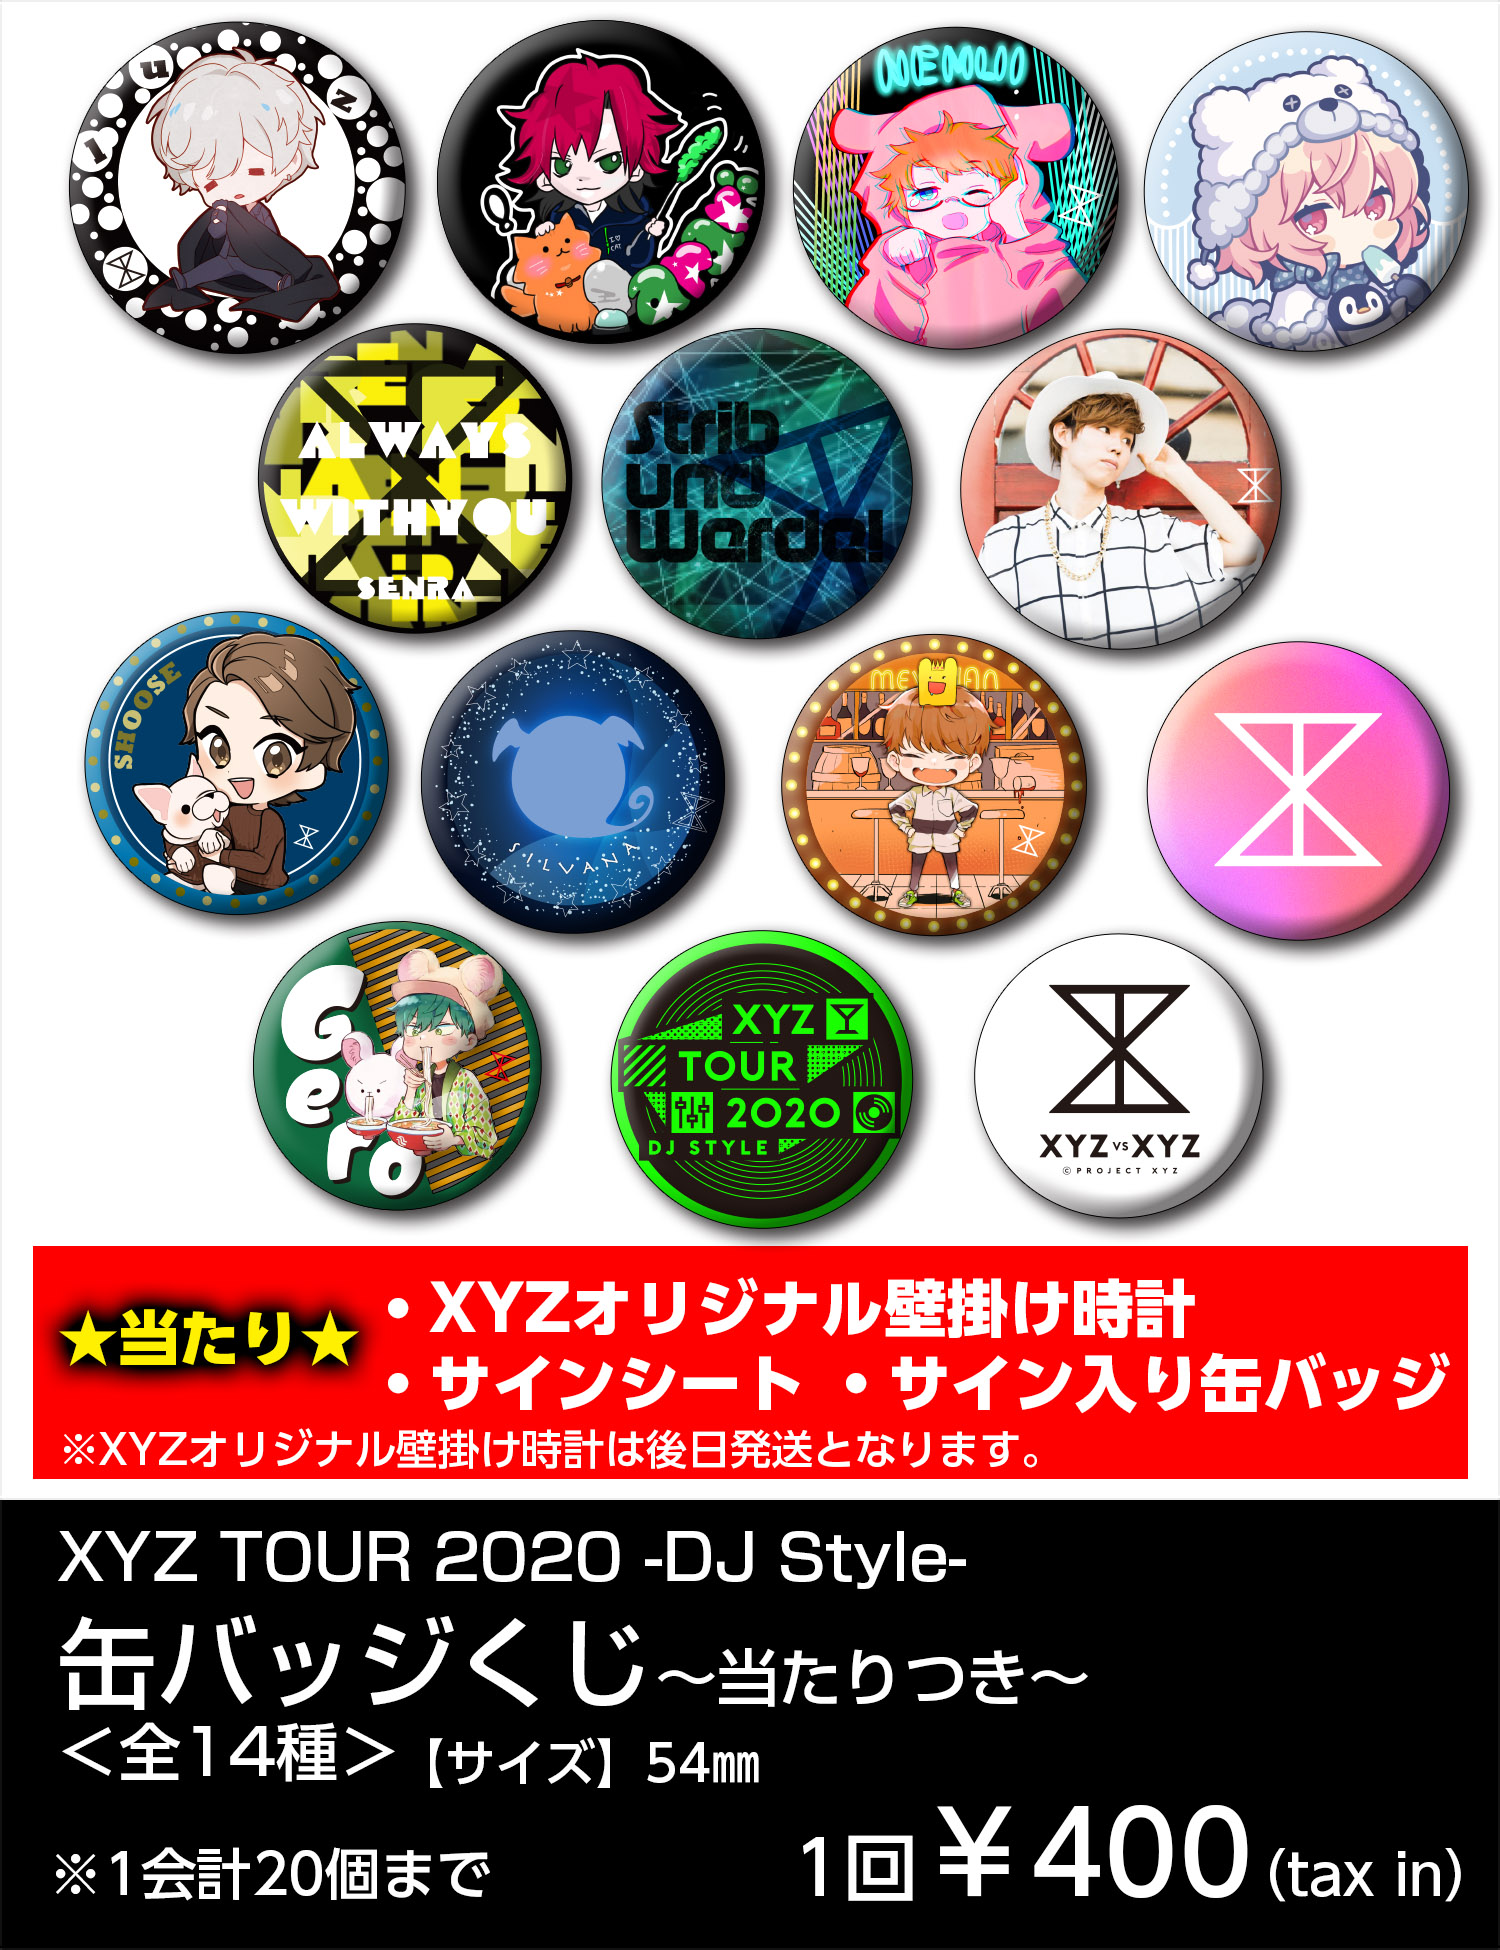 XYZ TOUR 2020 -DJ Style- | GOODS